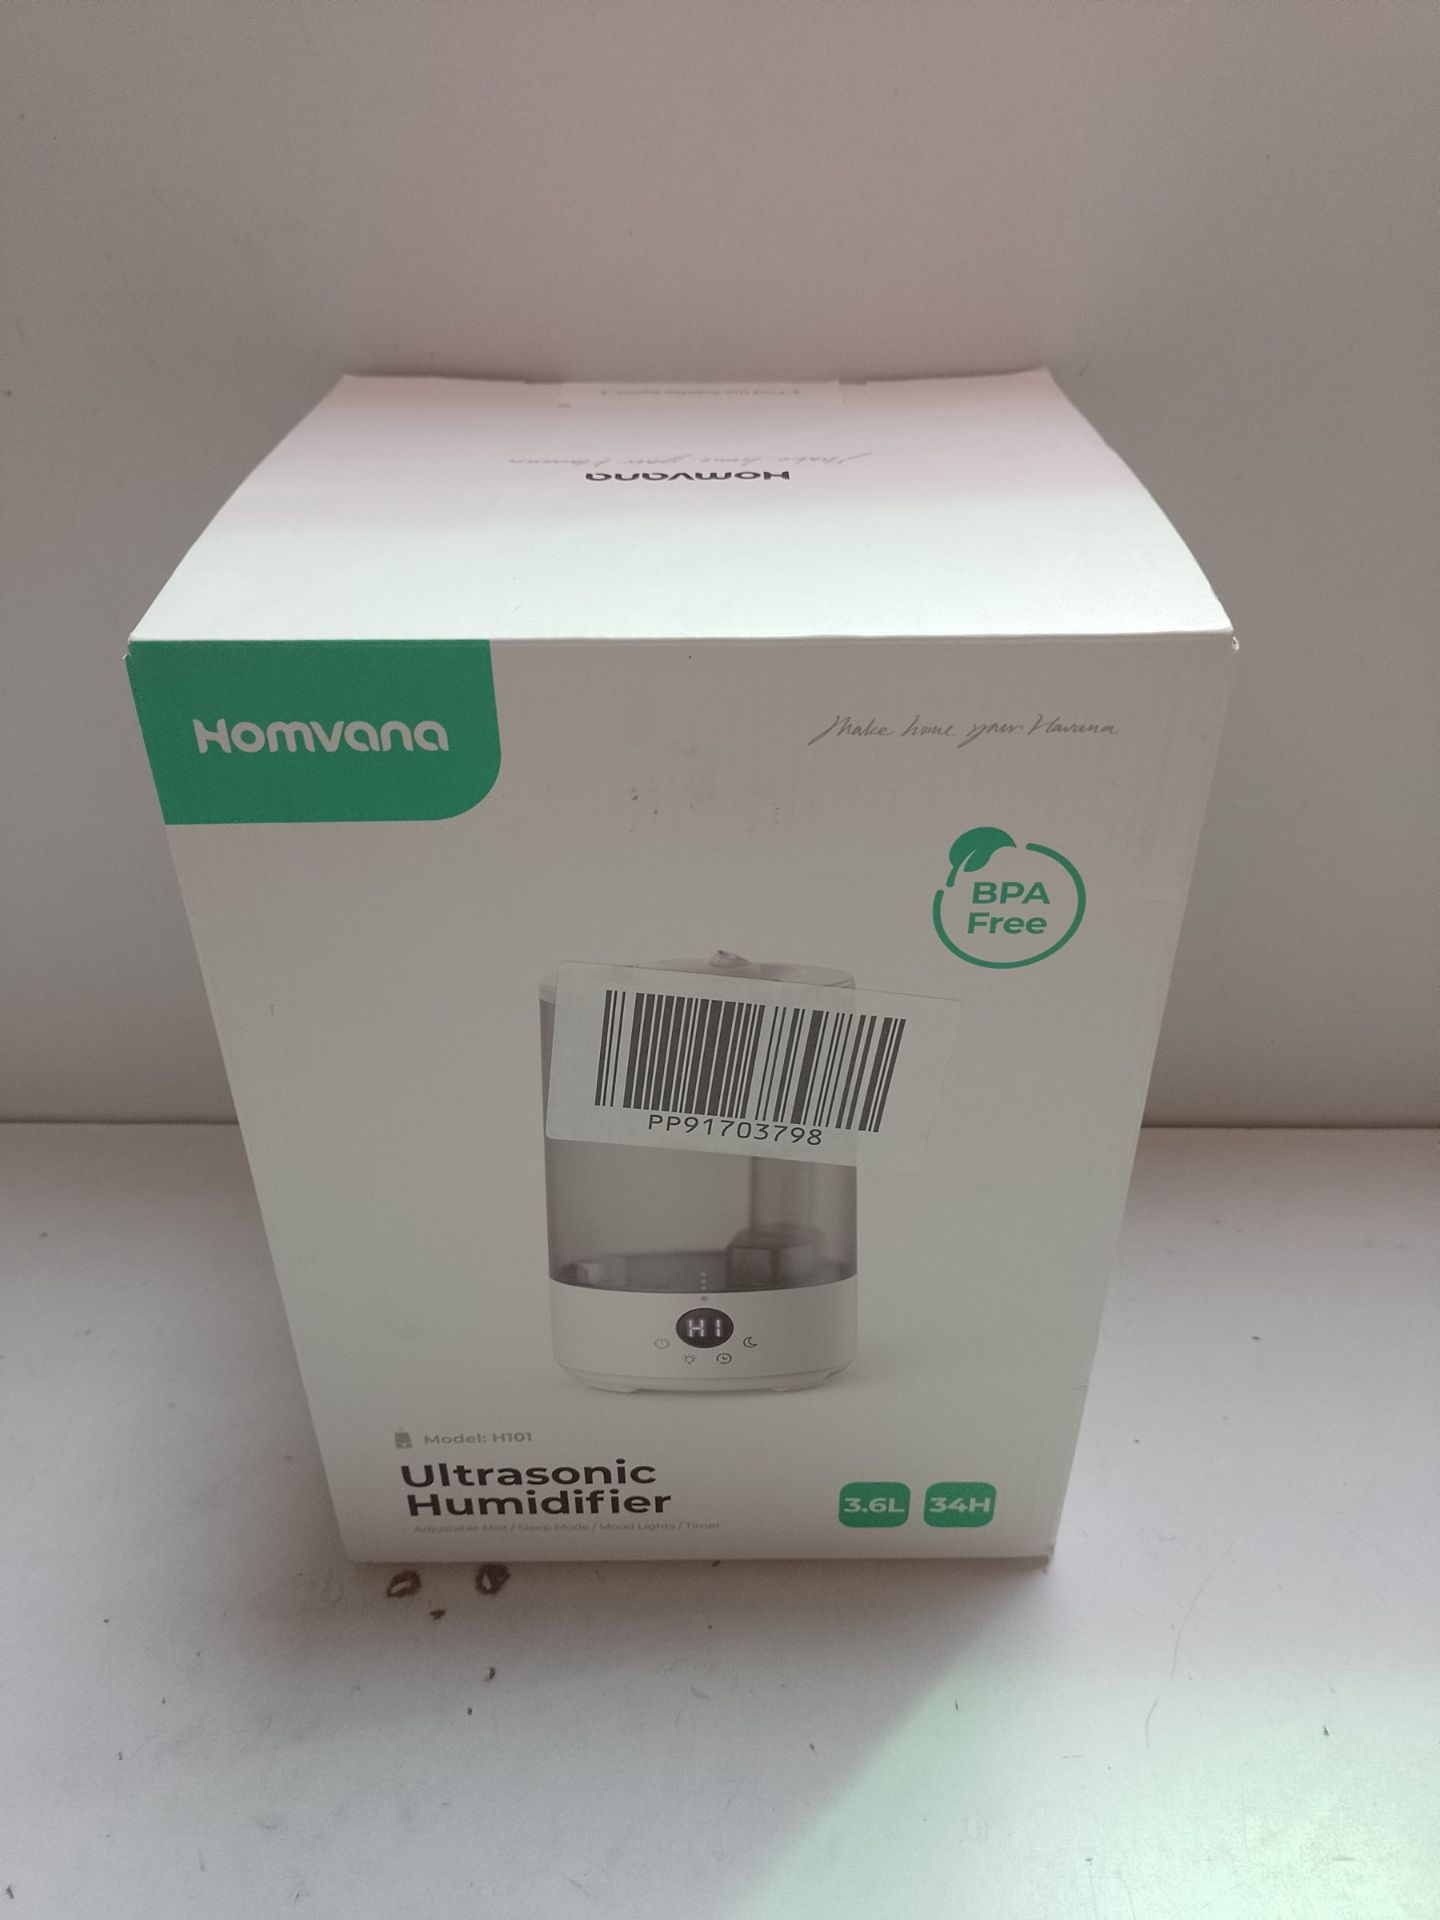 RRP £37.95 Homvana Humidifier for Bedroom - Image 2 of 2